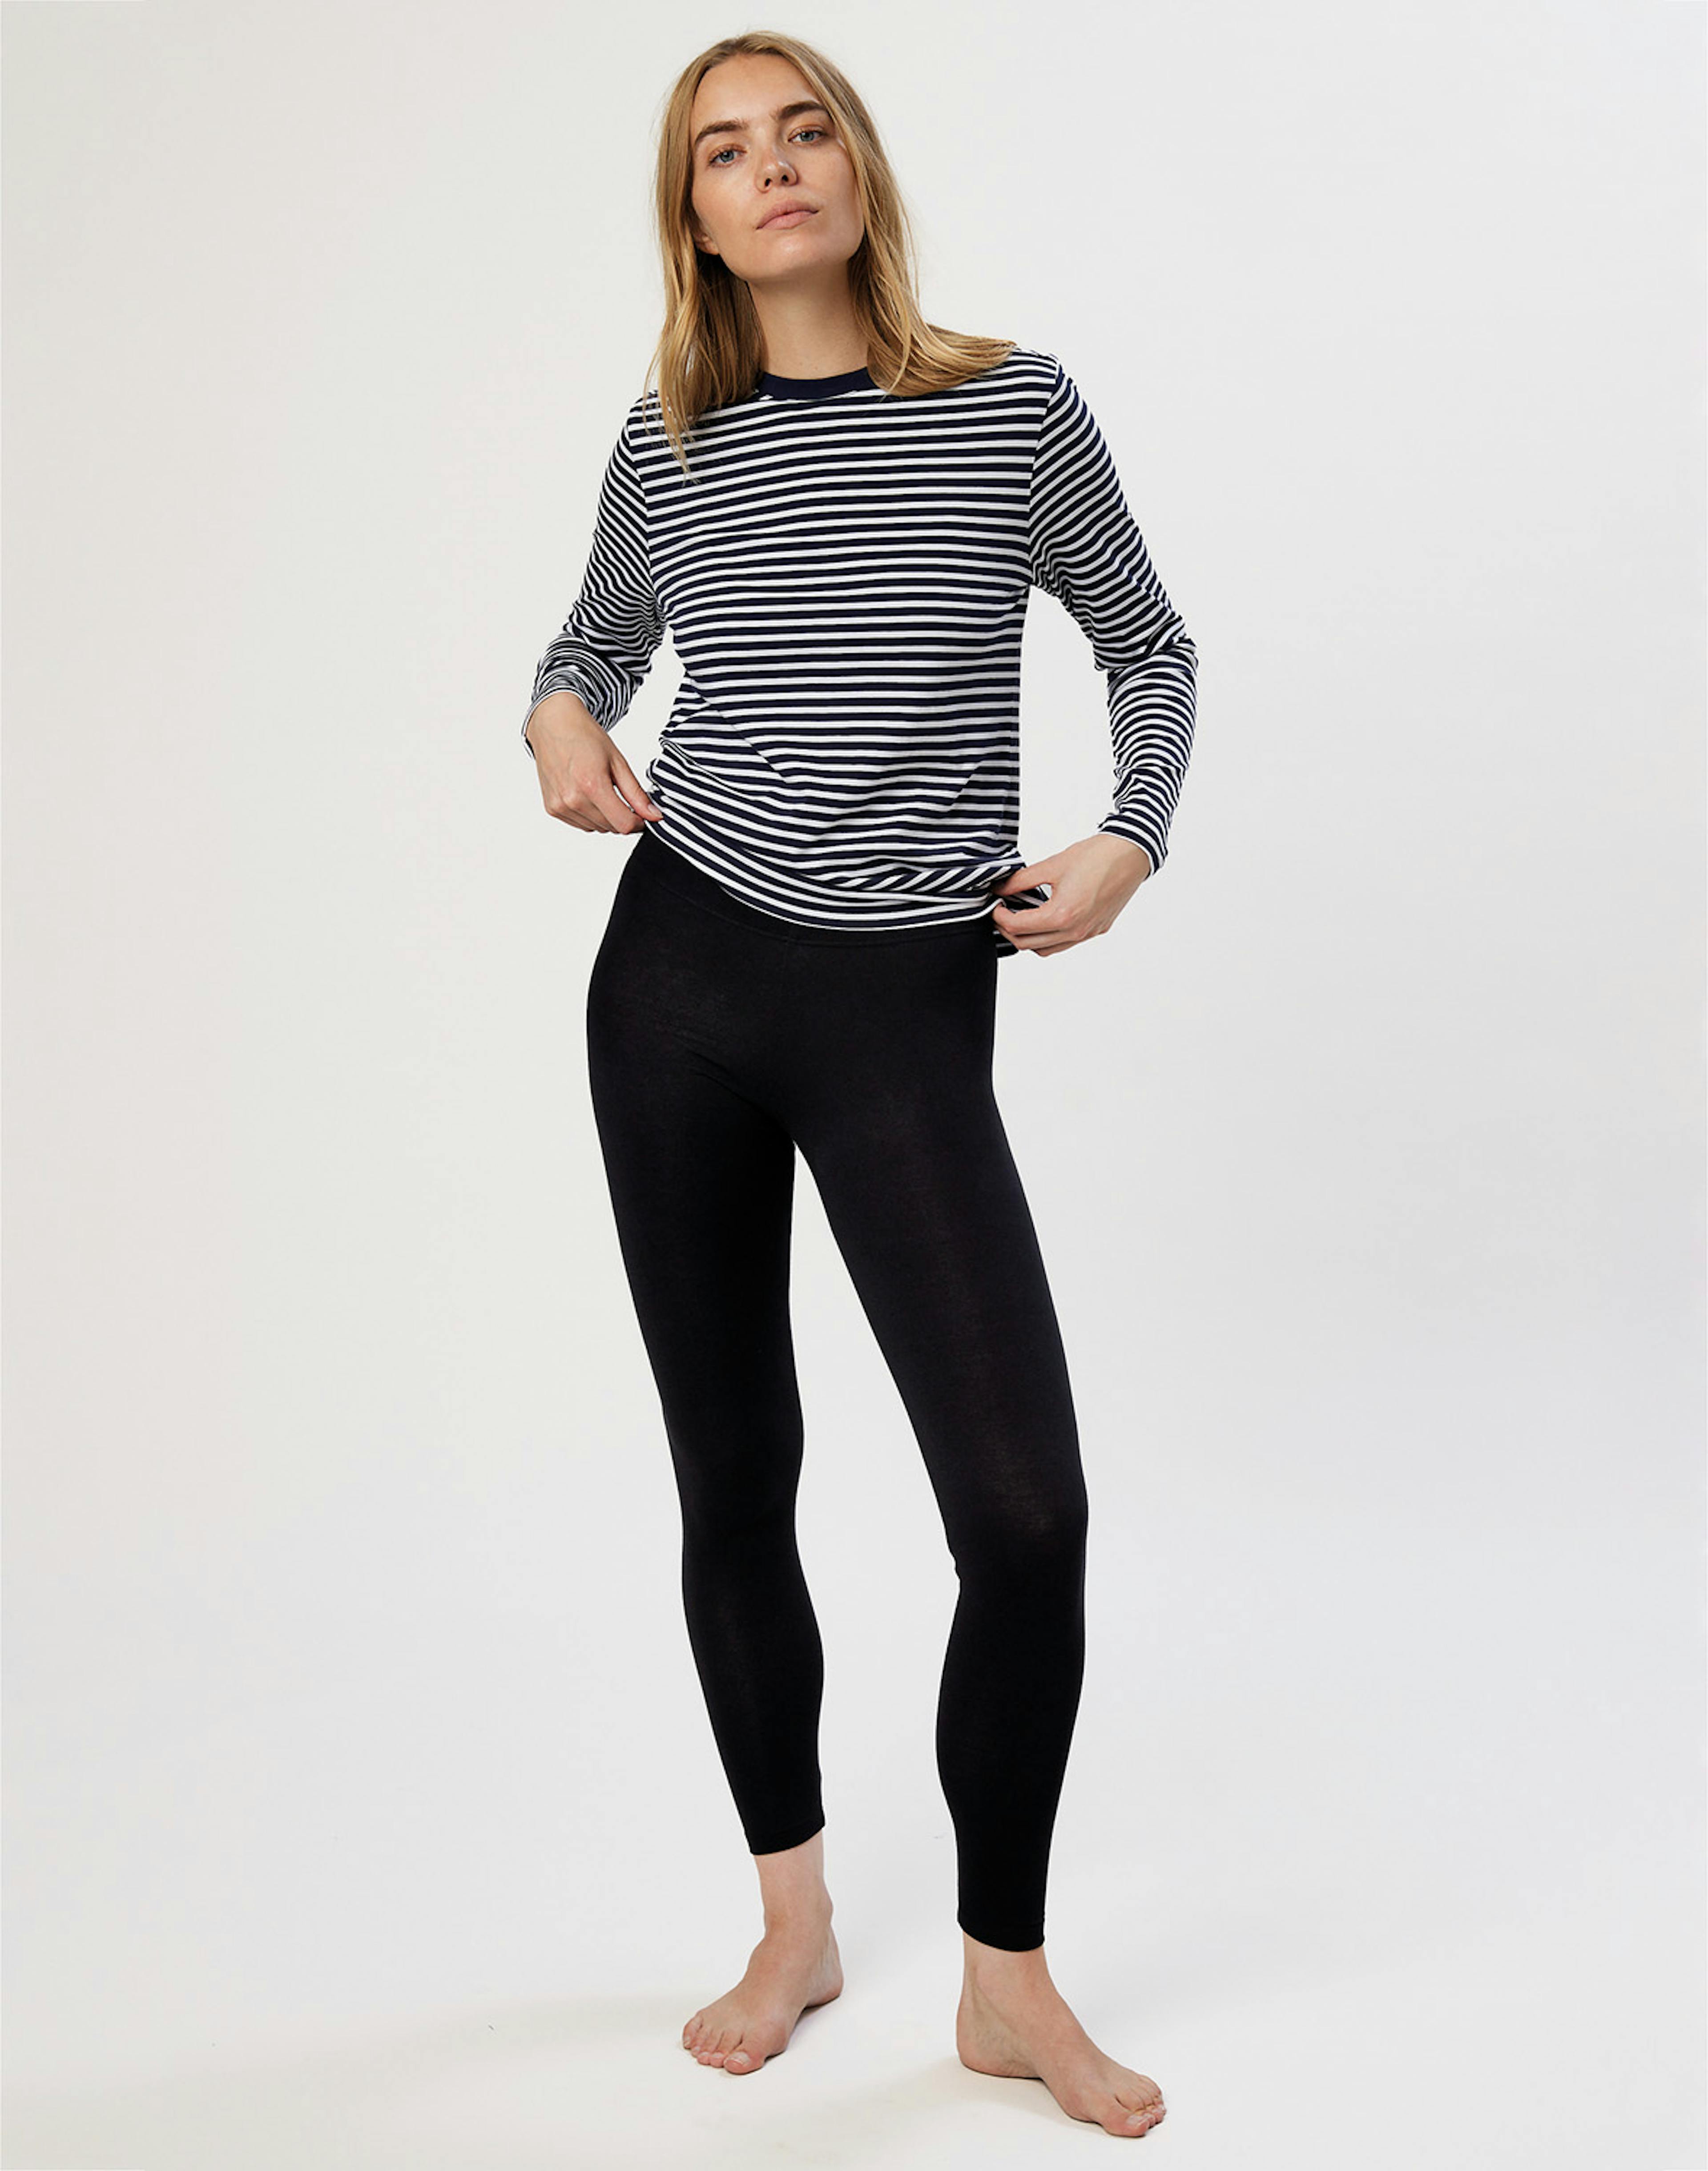 Women's 3/4 leggings in cotton - Black - Dilling